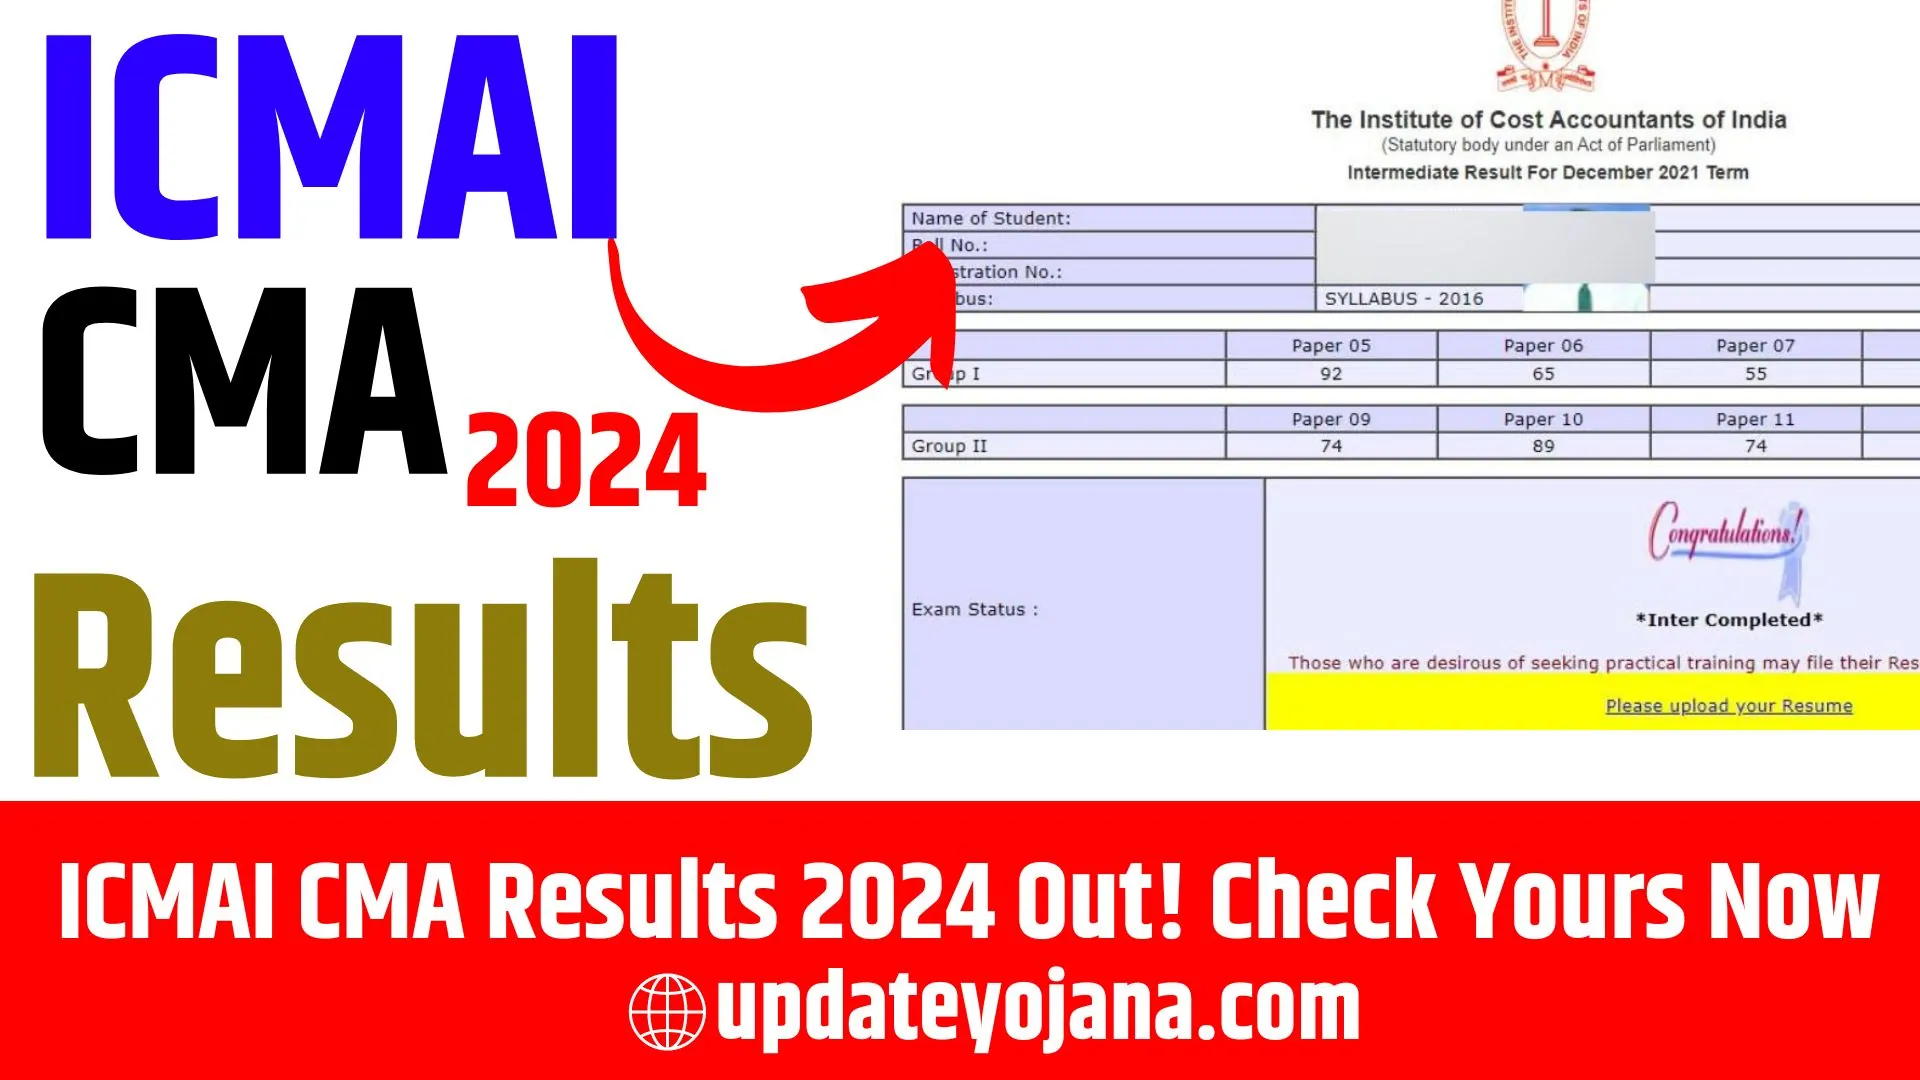 ICMAI CMA Results 2024